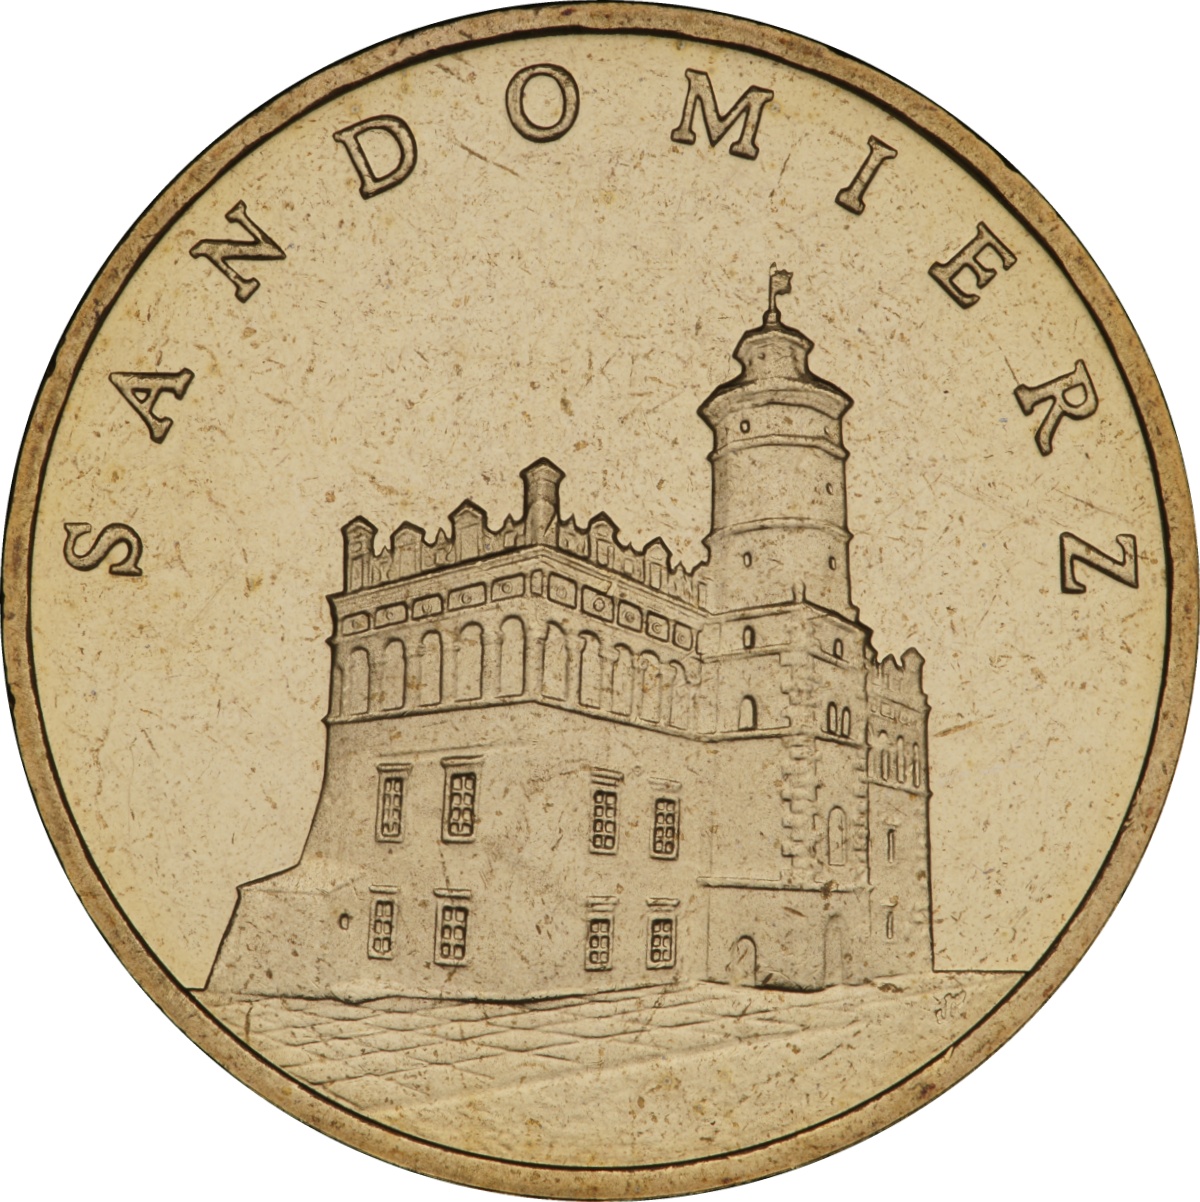 2zl-sandomierz-rewers-monety